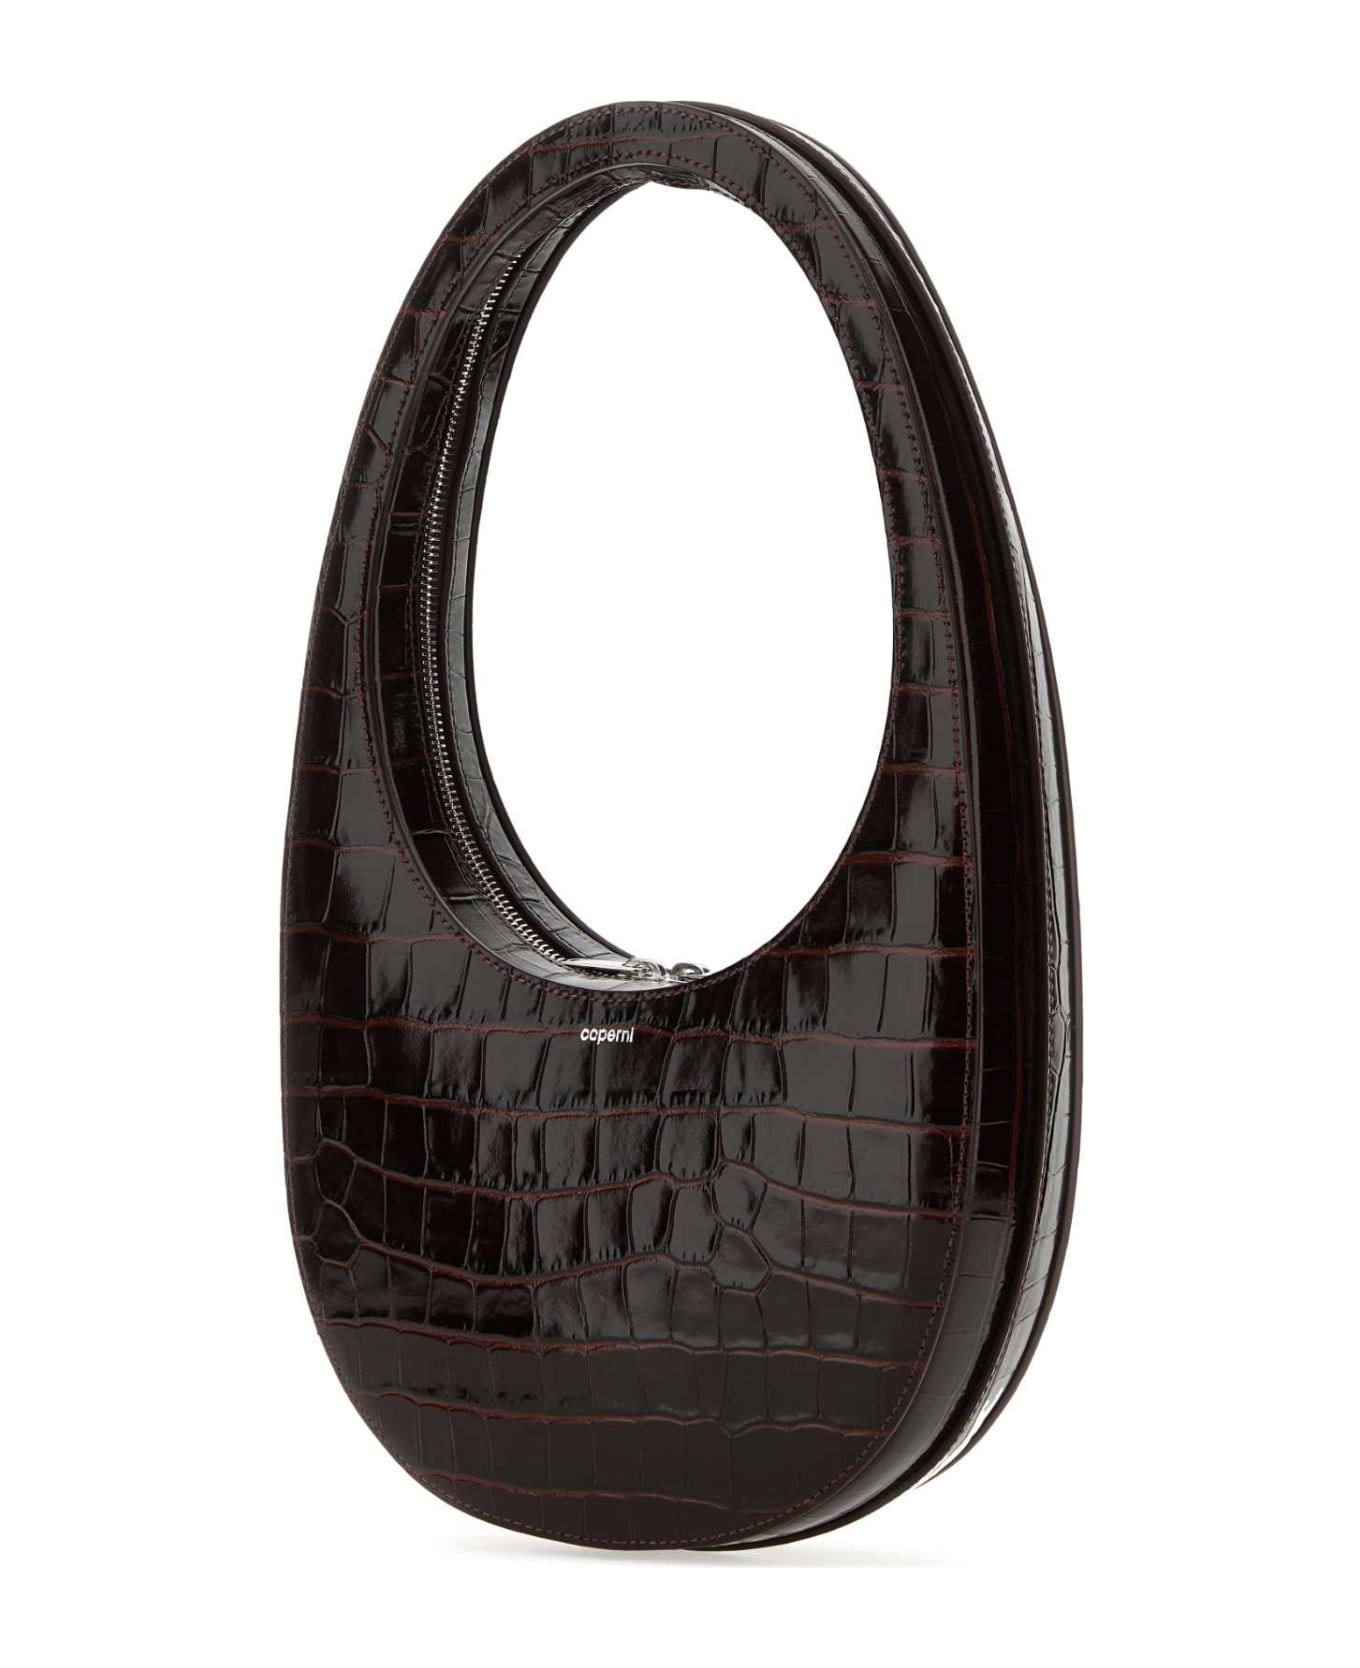 Coperni Chocolate Leather Swipe Handbag - BROWN